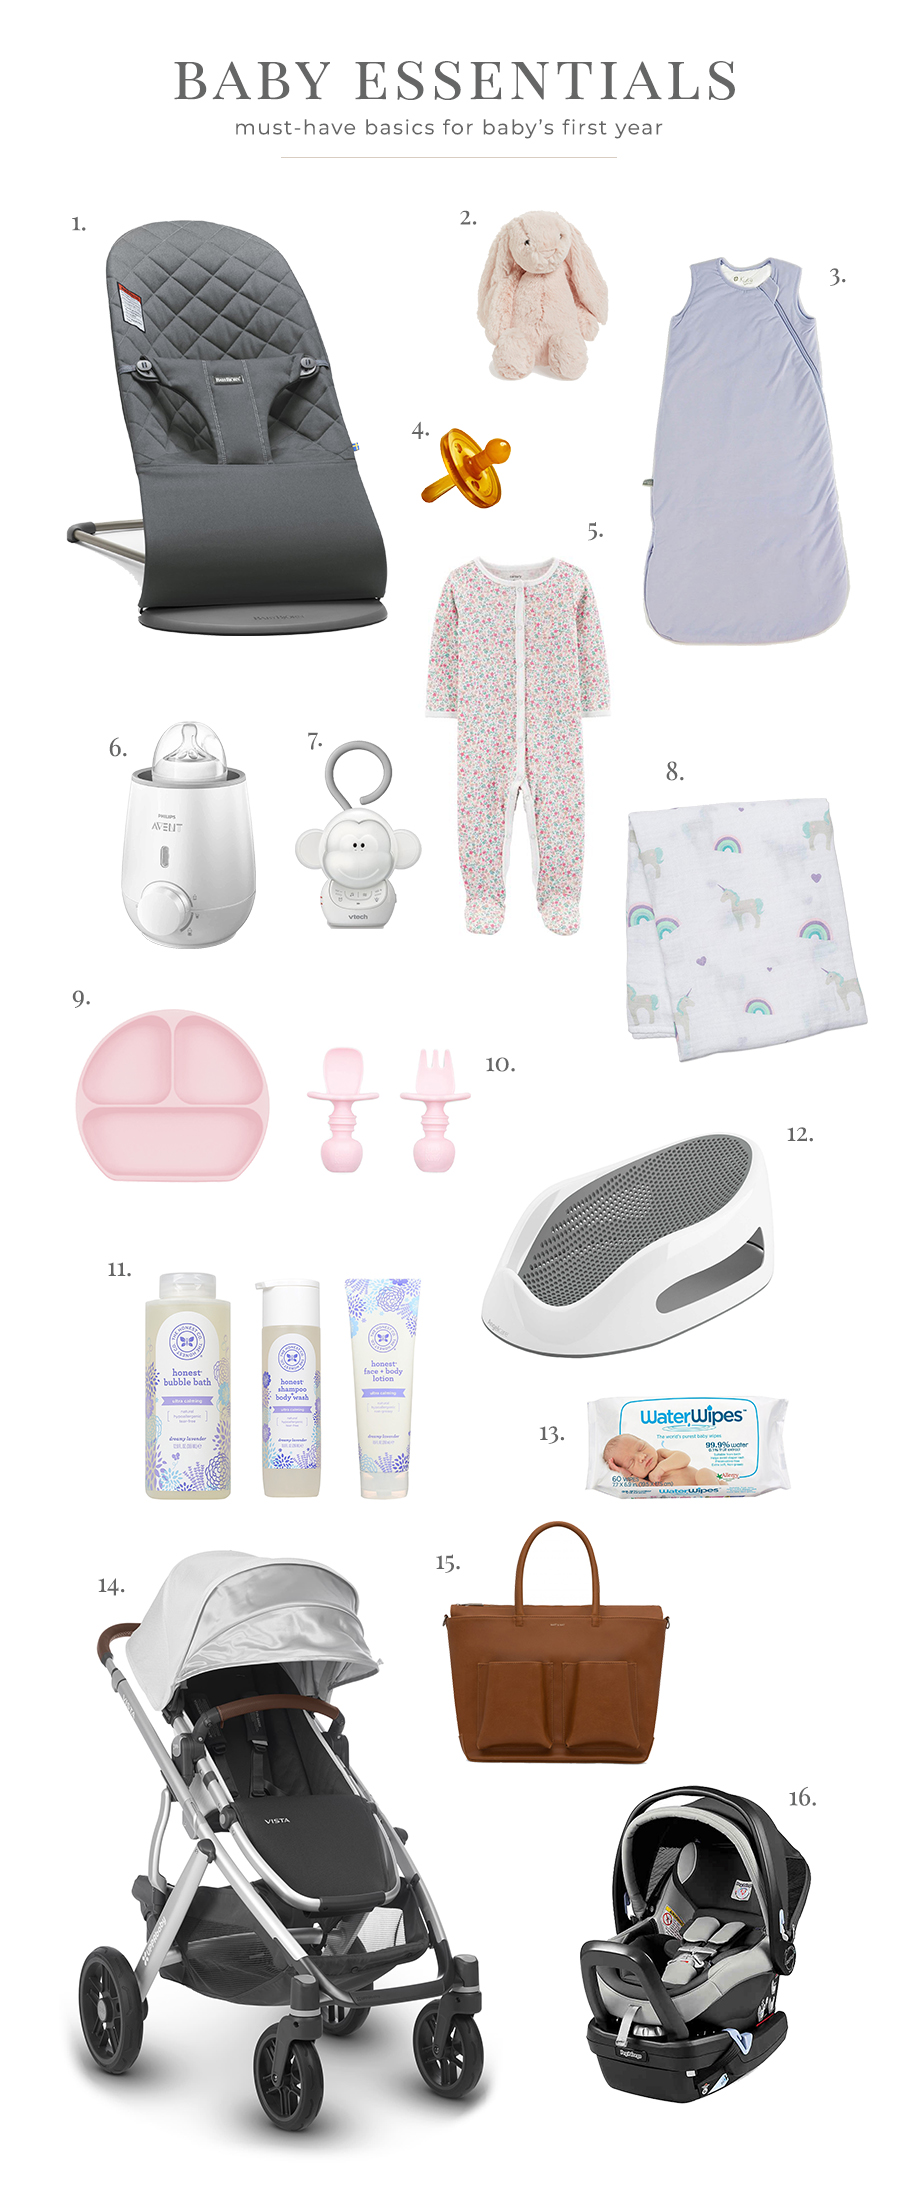 https://www.nickandalicia.com/wp-content/uploads/2019/07/Favourite-Baby-Essentials.jpg